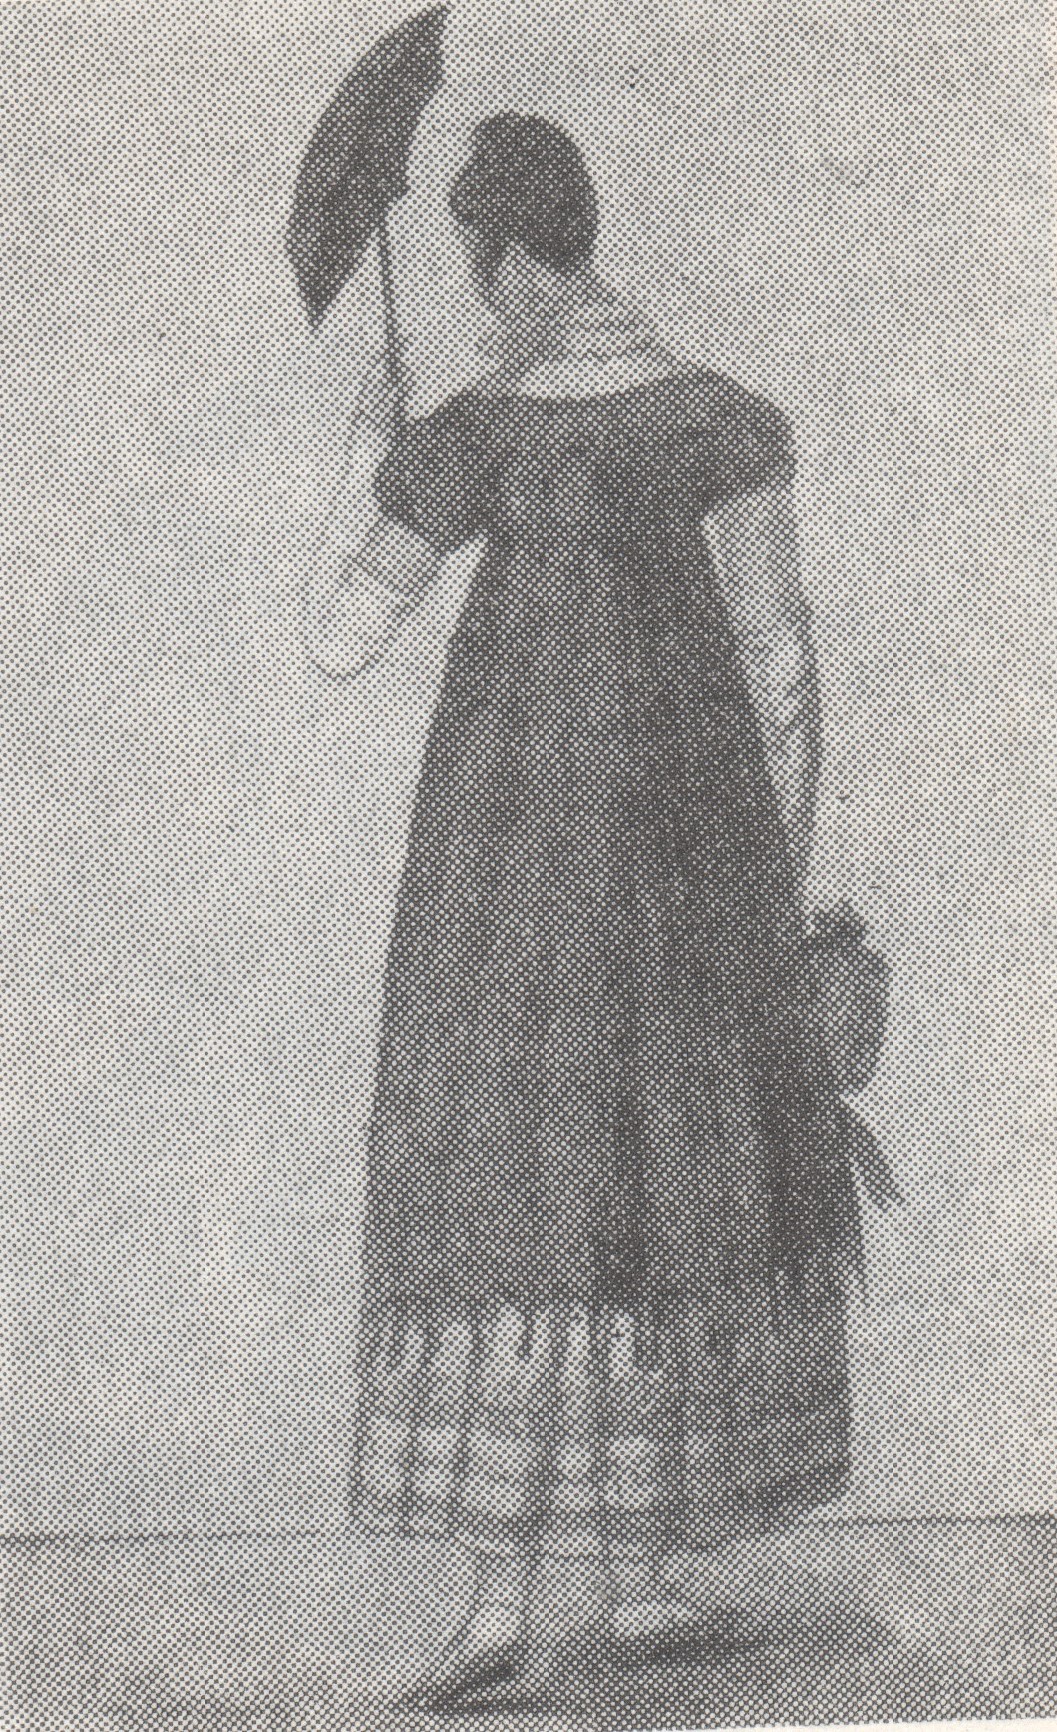 Рисунок из французского модного издания. Начало XIX века